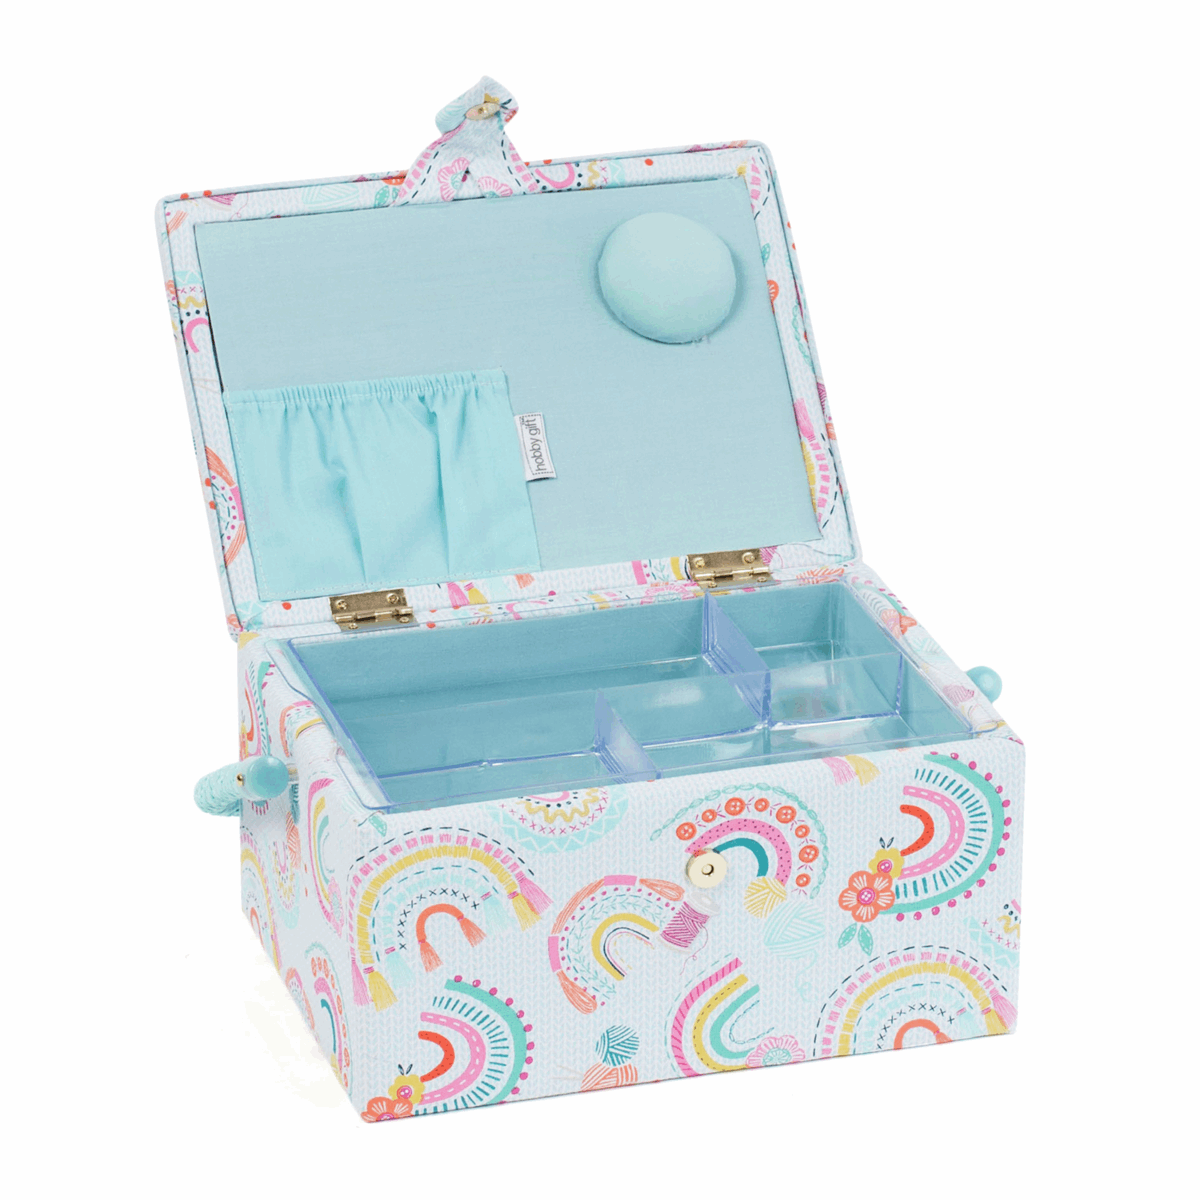 Rainbow Sewing Box - Medium